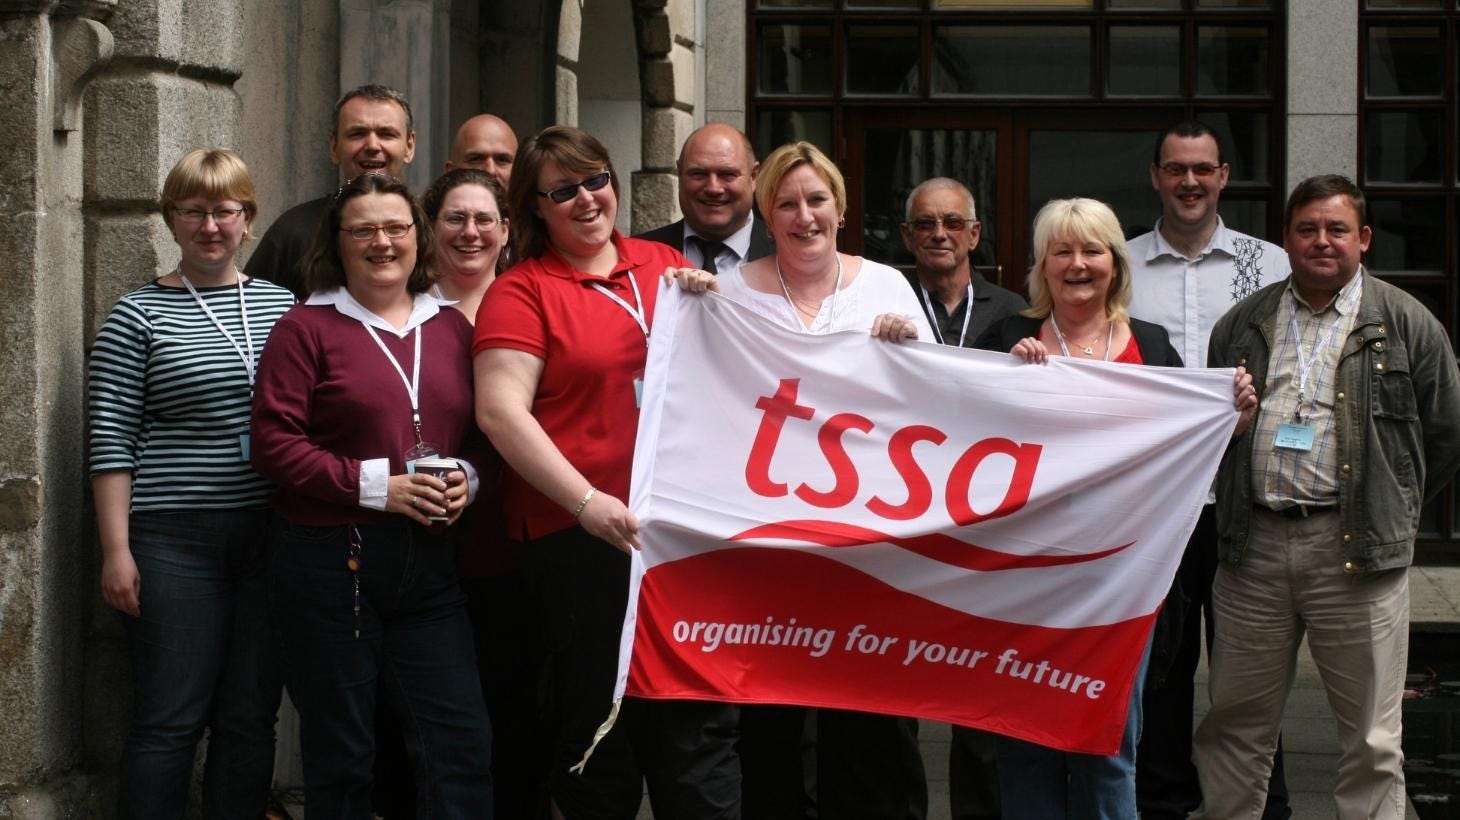 TSSA reps holding a TSSA logo flag